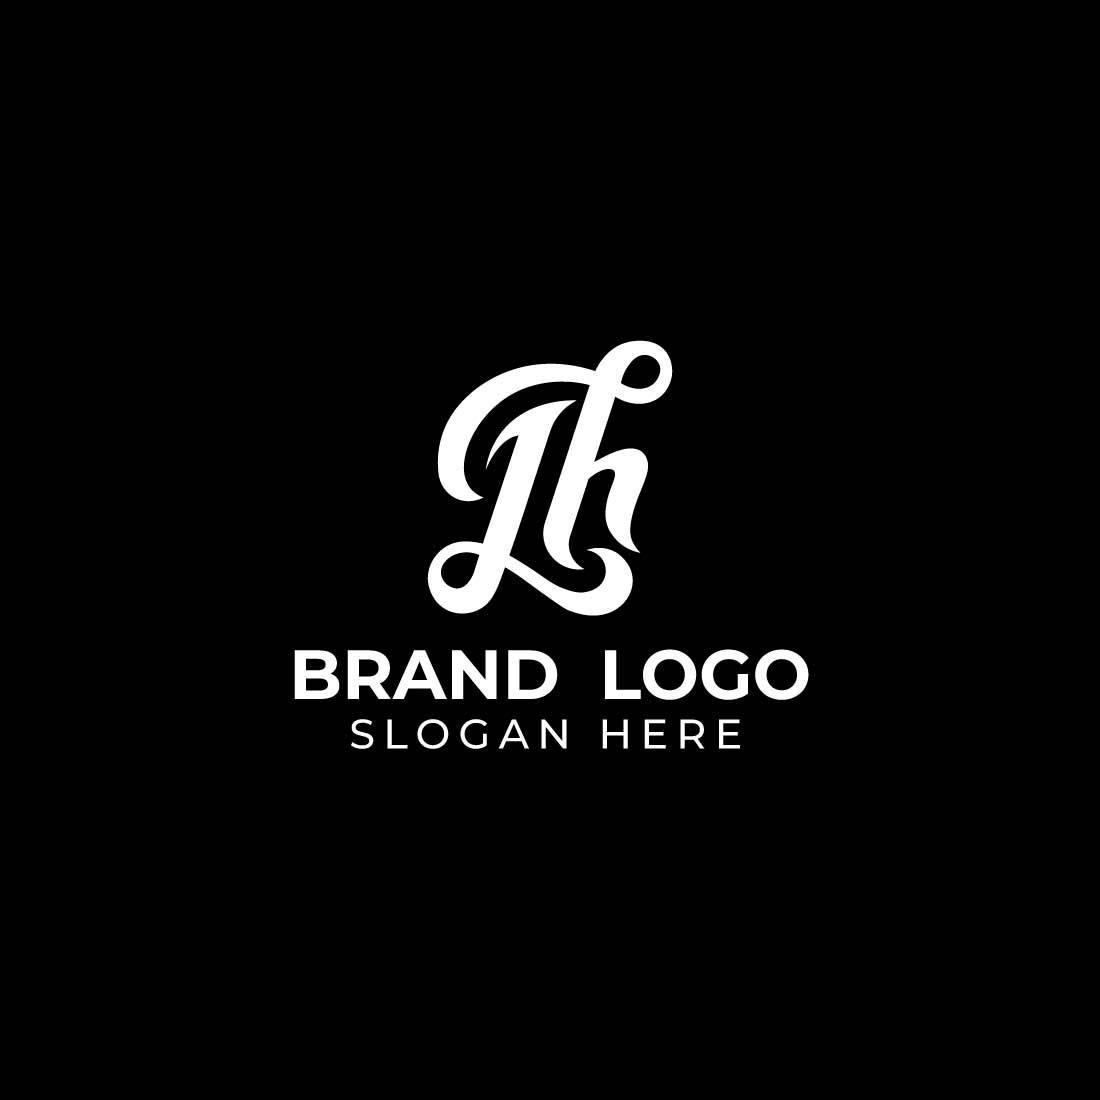 Professional Letter LH logo design preview image.